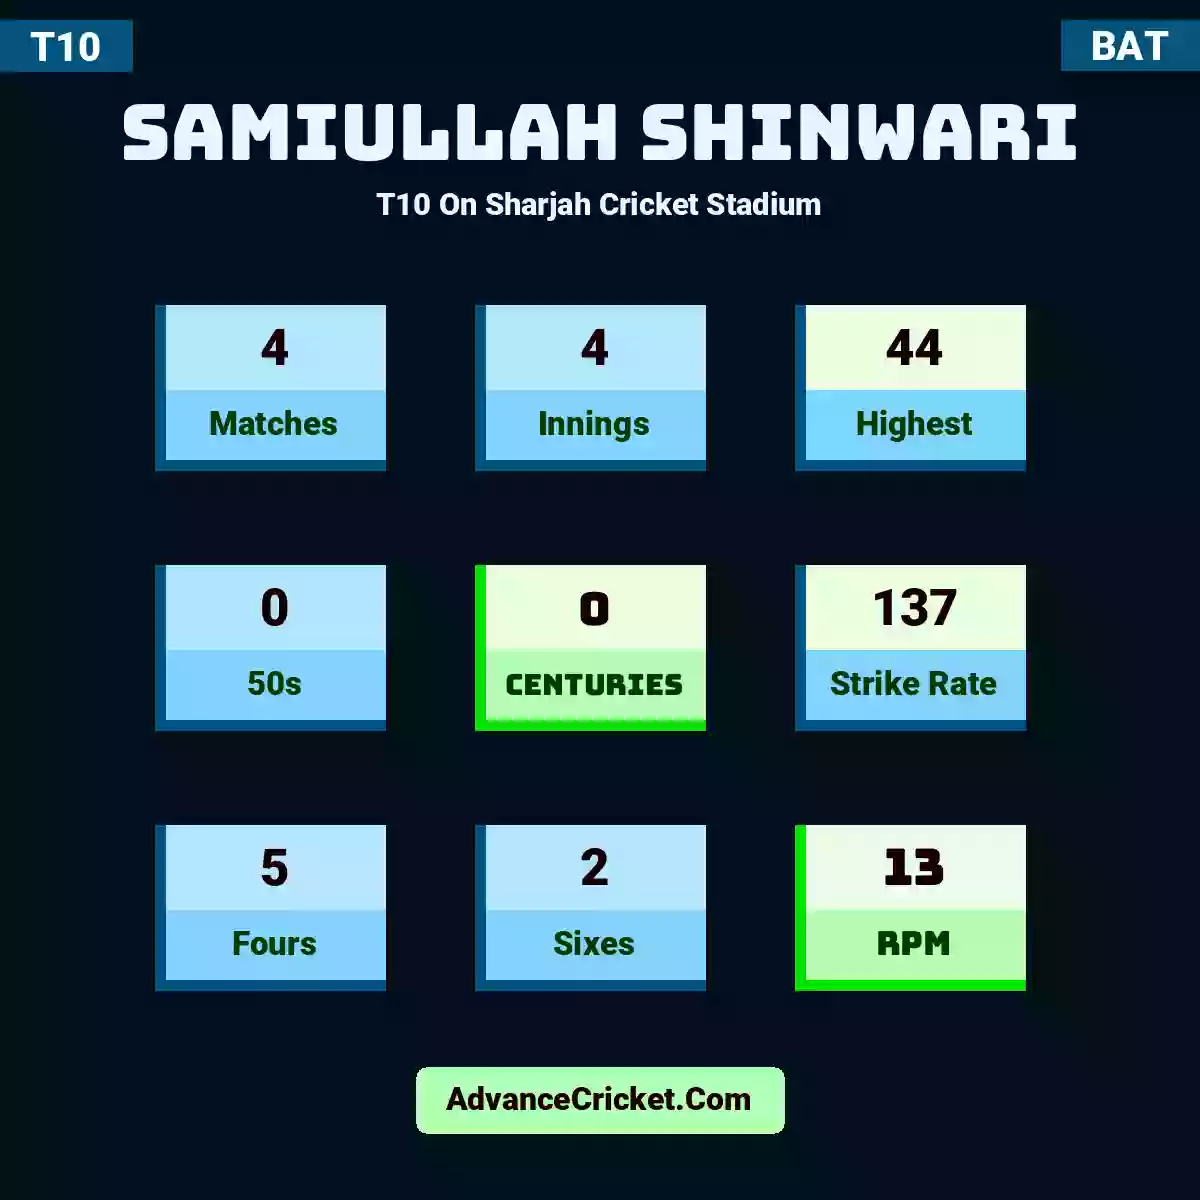 Samiullah Shinwari T10  On Sharjah Cricket Stadium, Samiullah Shinwari played 4 matches, scored 44 runs as highest, 0 half-centuries, and 0 centuries, with a strike rate of 137. S.Shinwari hit 5 fours and 2 sixes, with an RPM of 13.